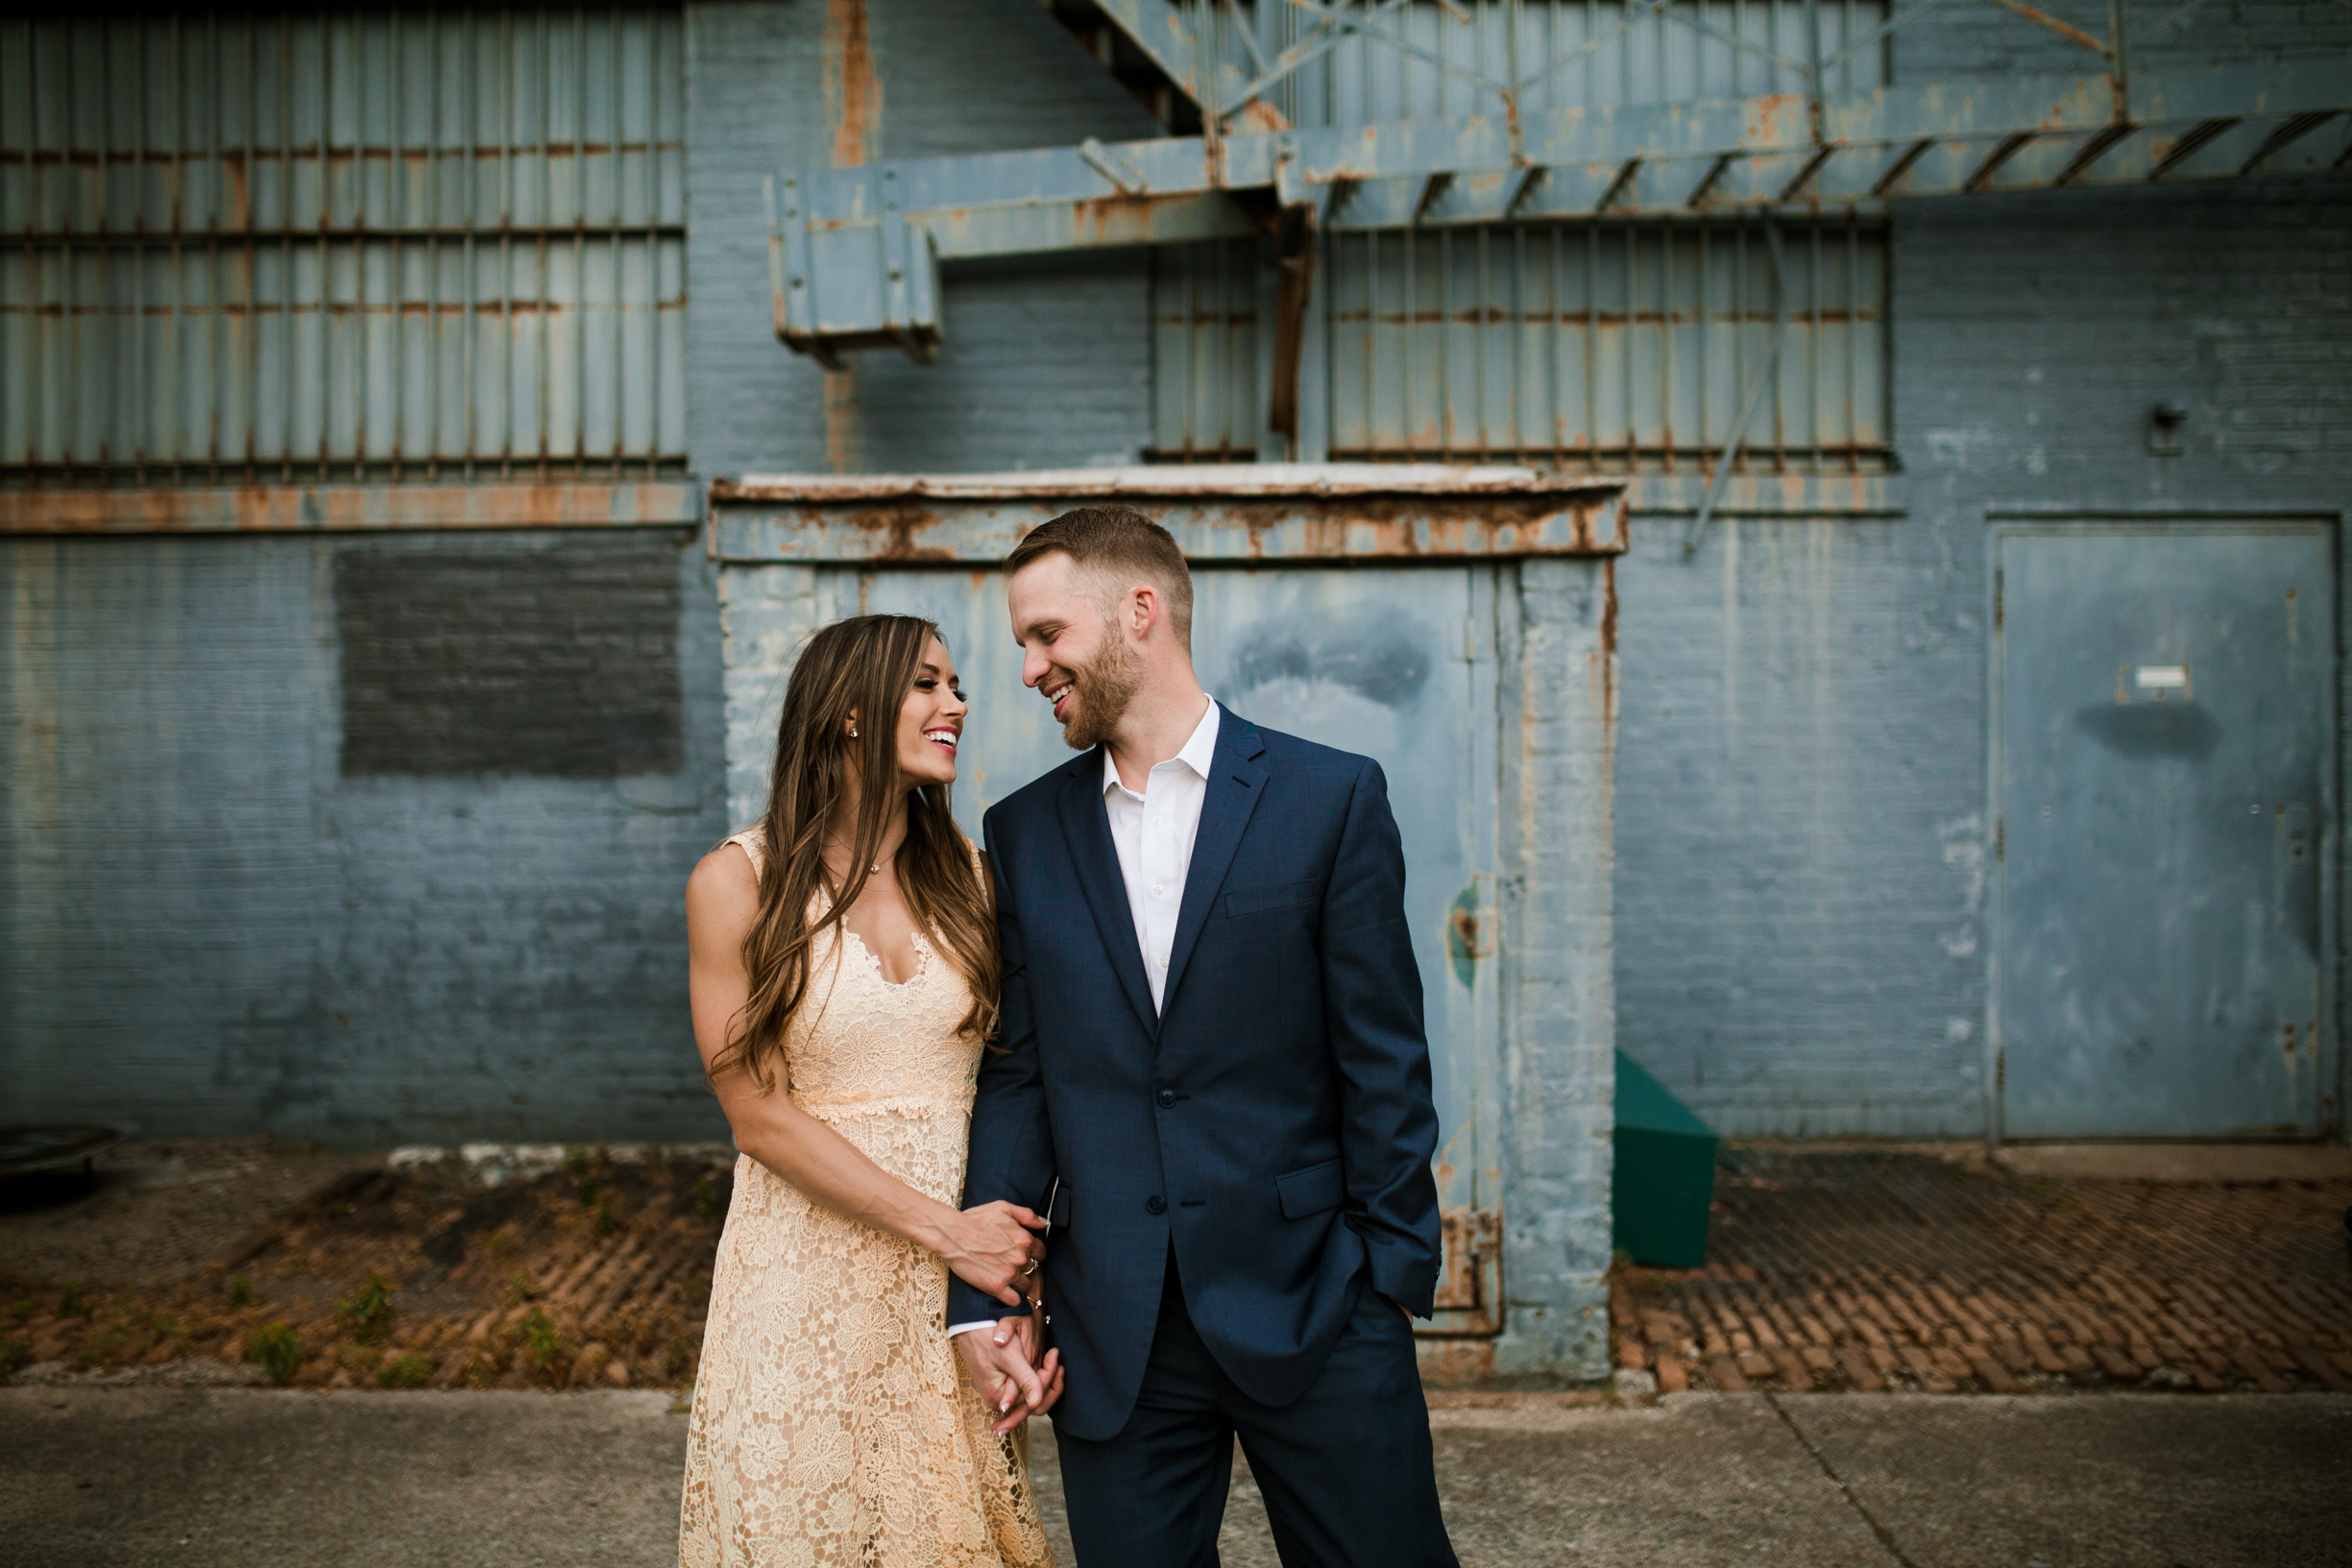 Victoria & Chad Engagement 2018 Crystal Ludwick Photo Louisville Kentucky Wedding Photographer WEBSITE (44 of 48).jpg